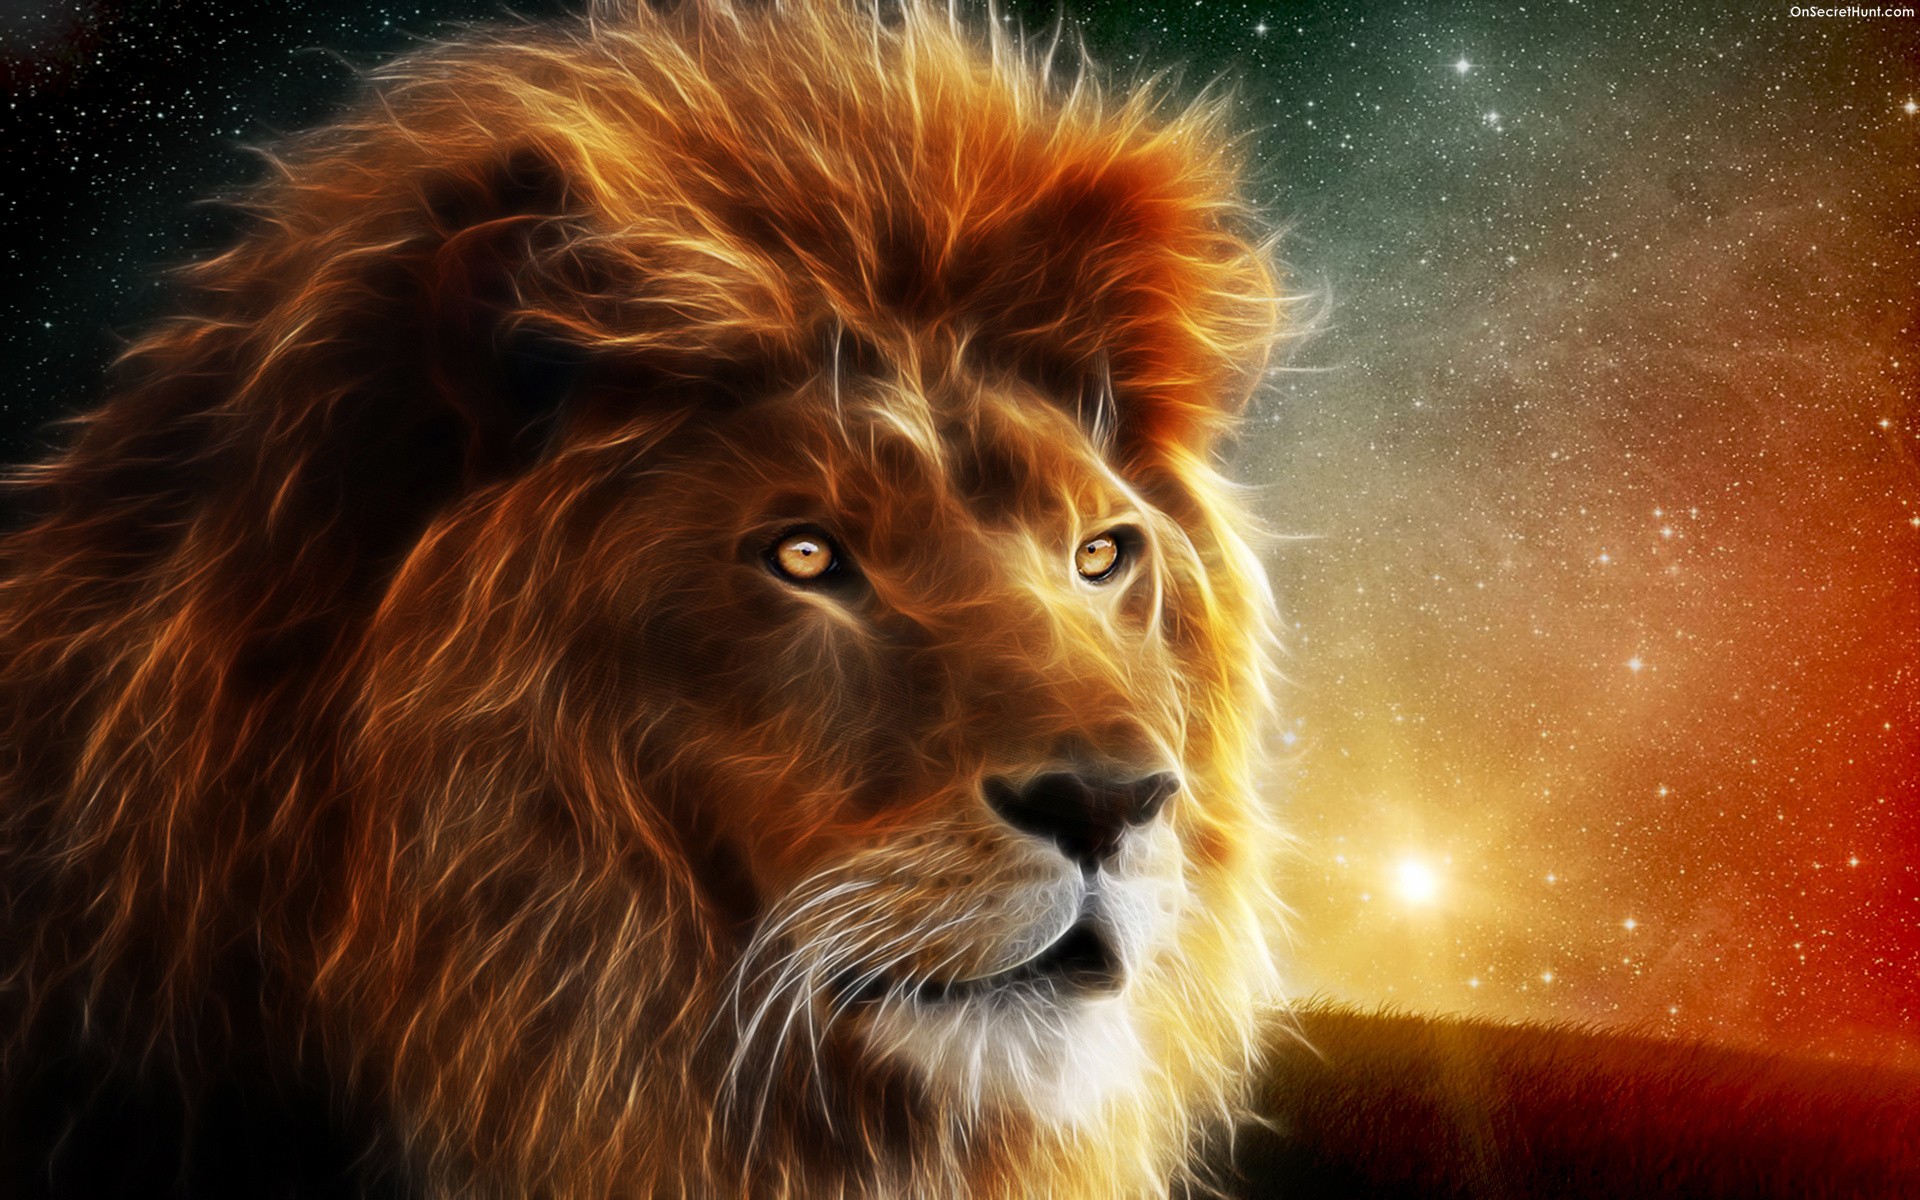 Animated Fire Lion Animal Space | On Secret Hunt